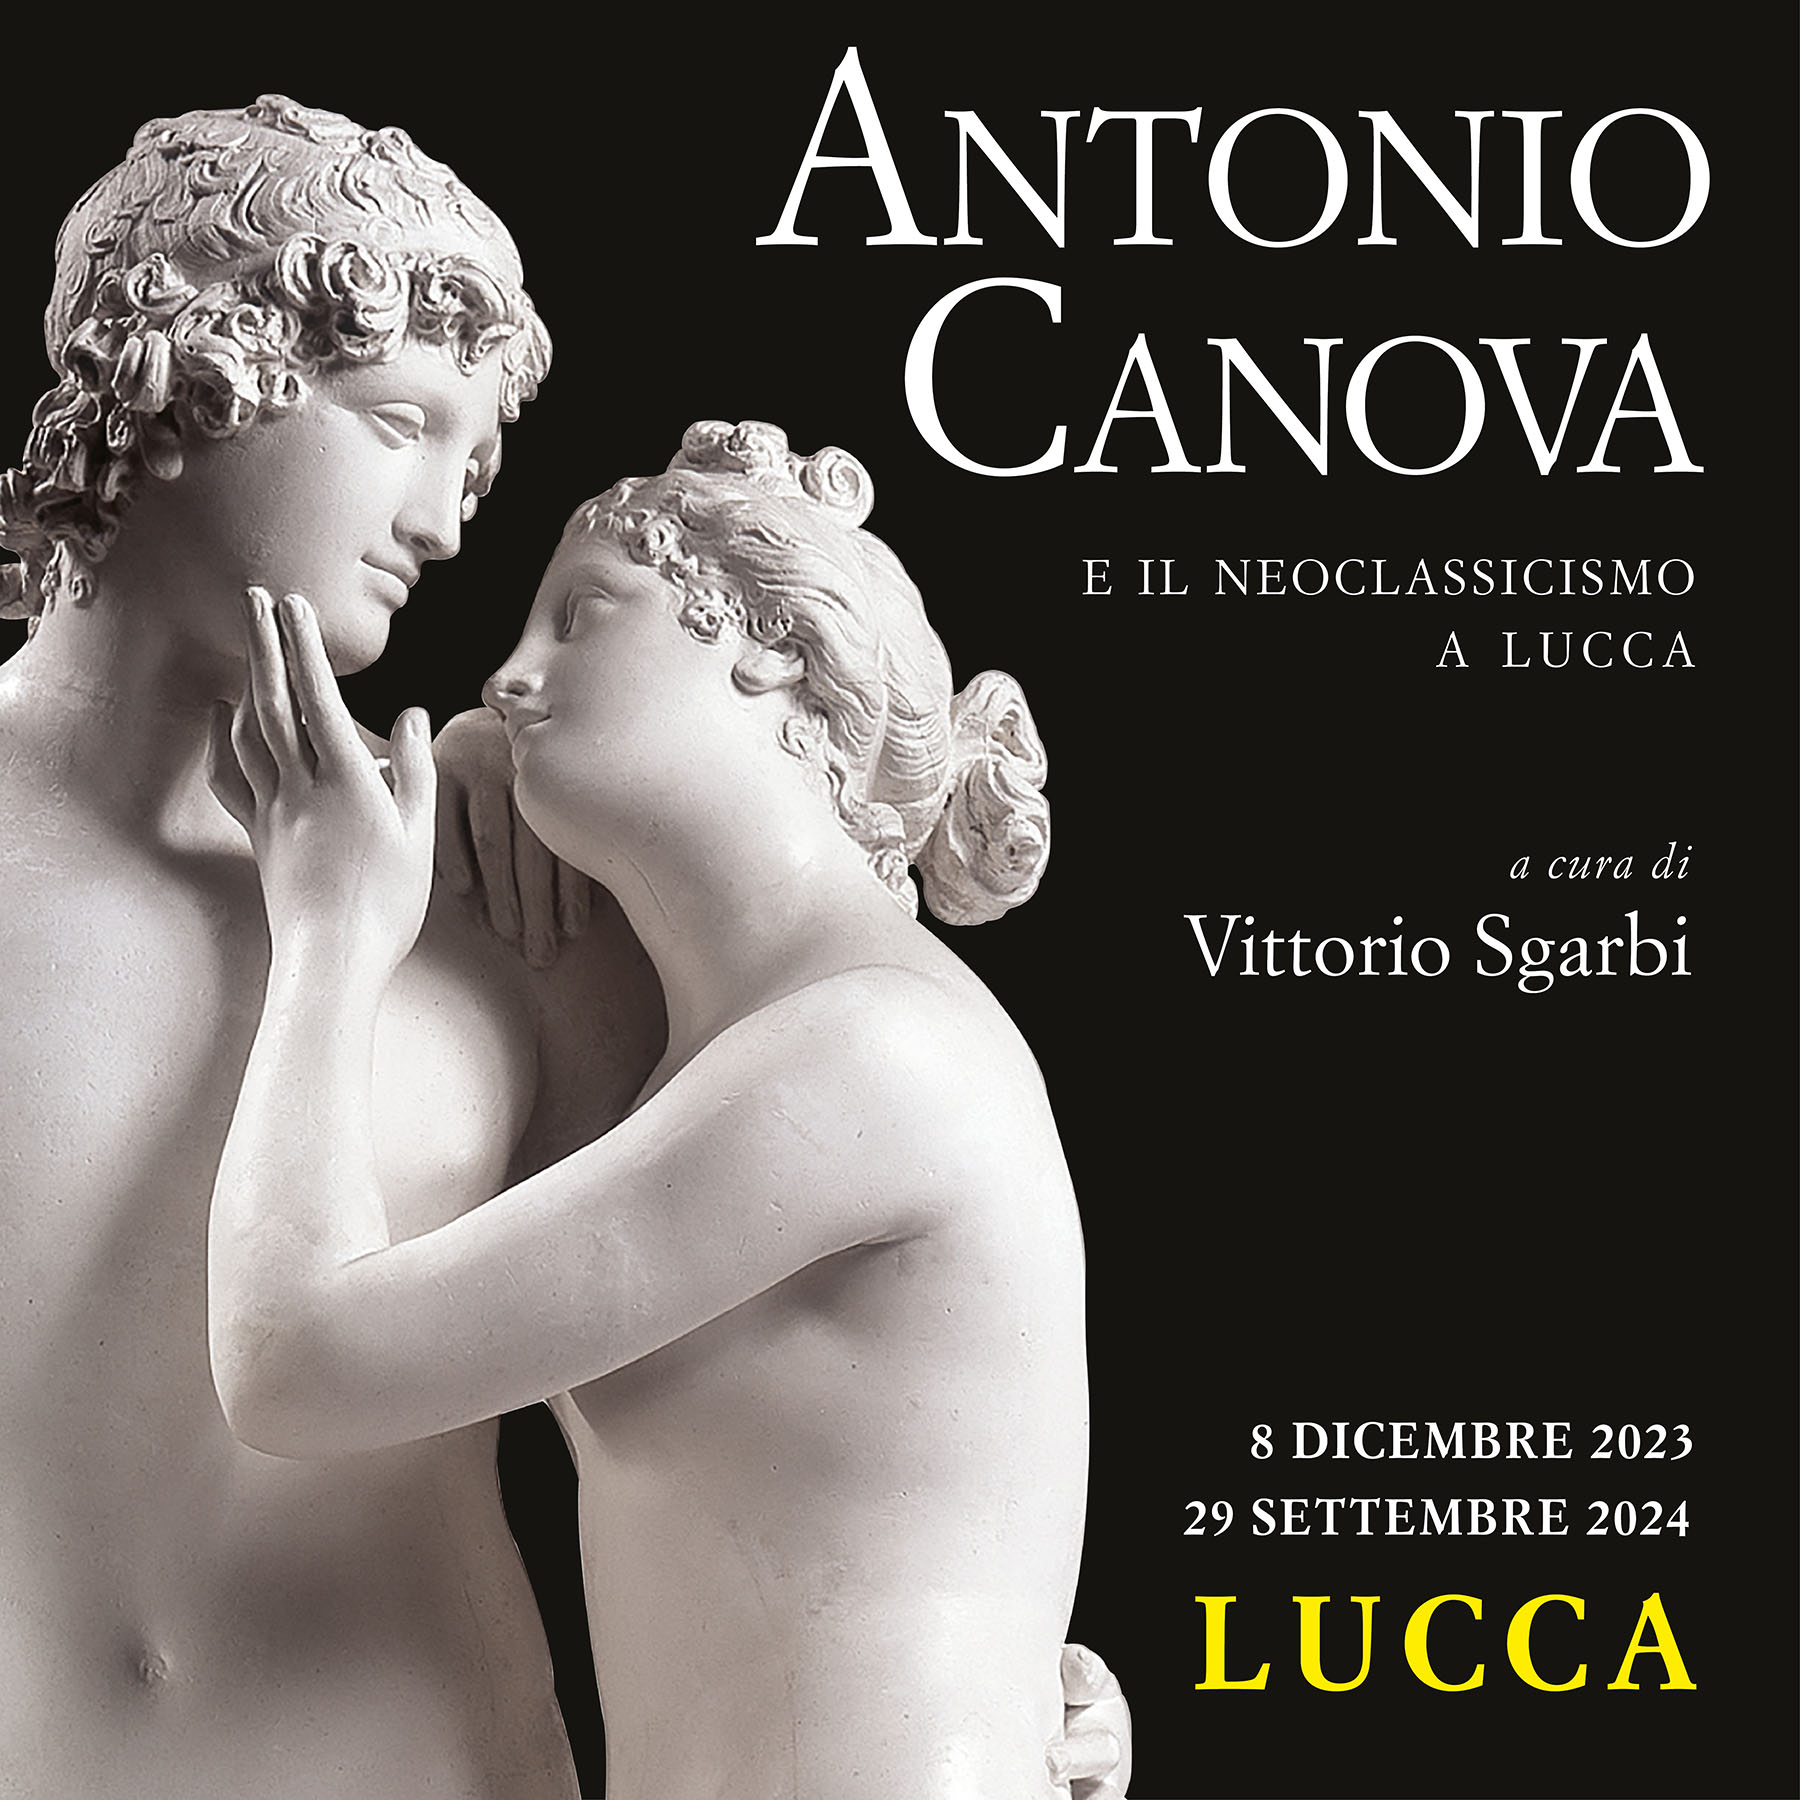 ANTONIO CANOVA and Neoclassicism exhibition in Lucca